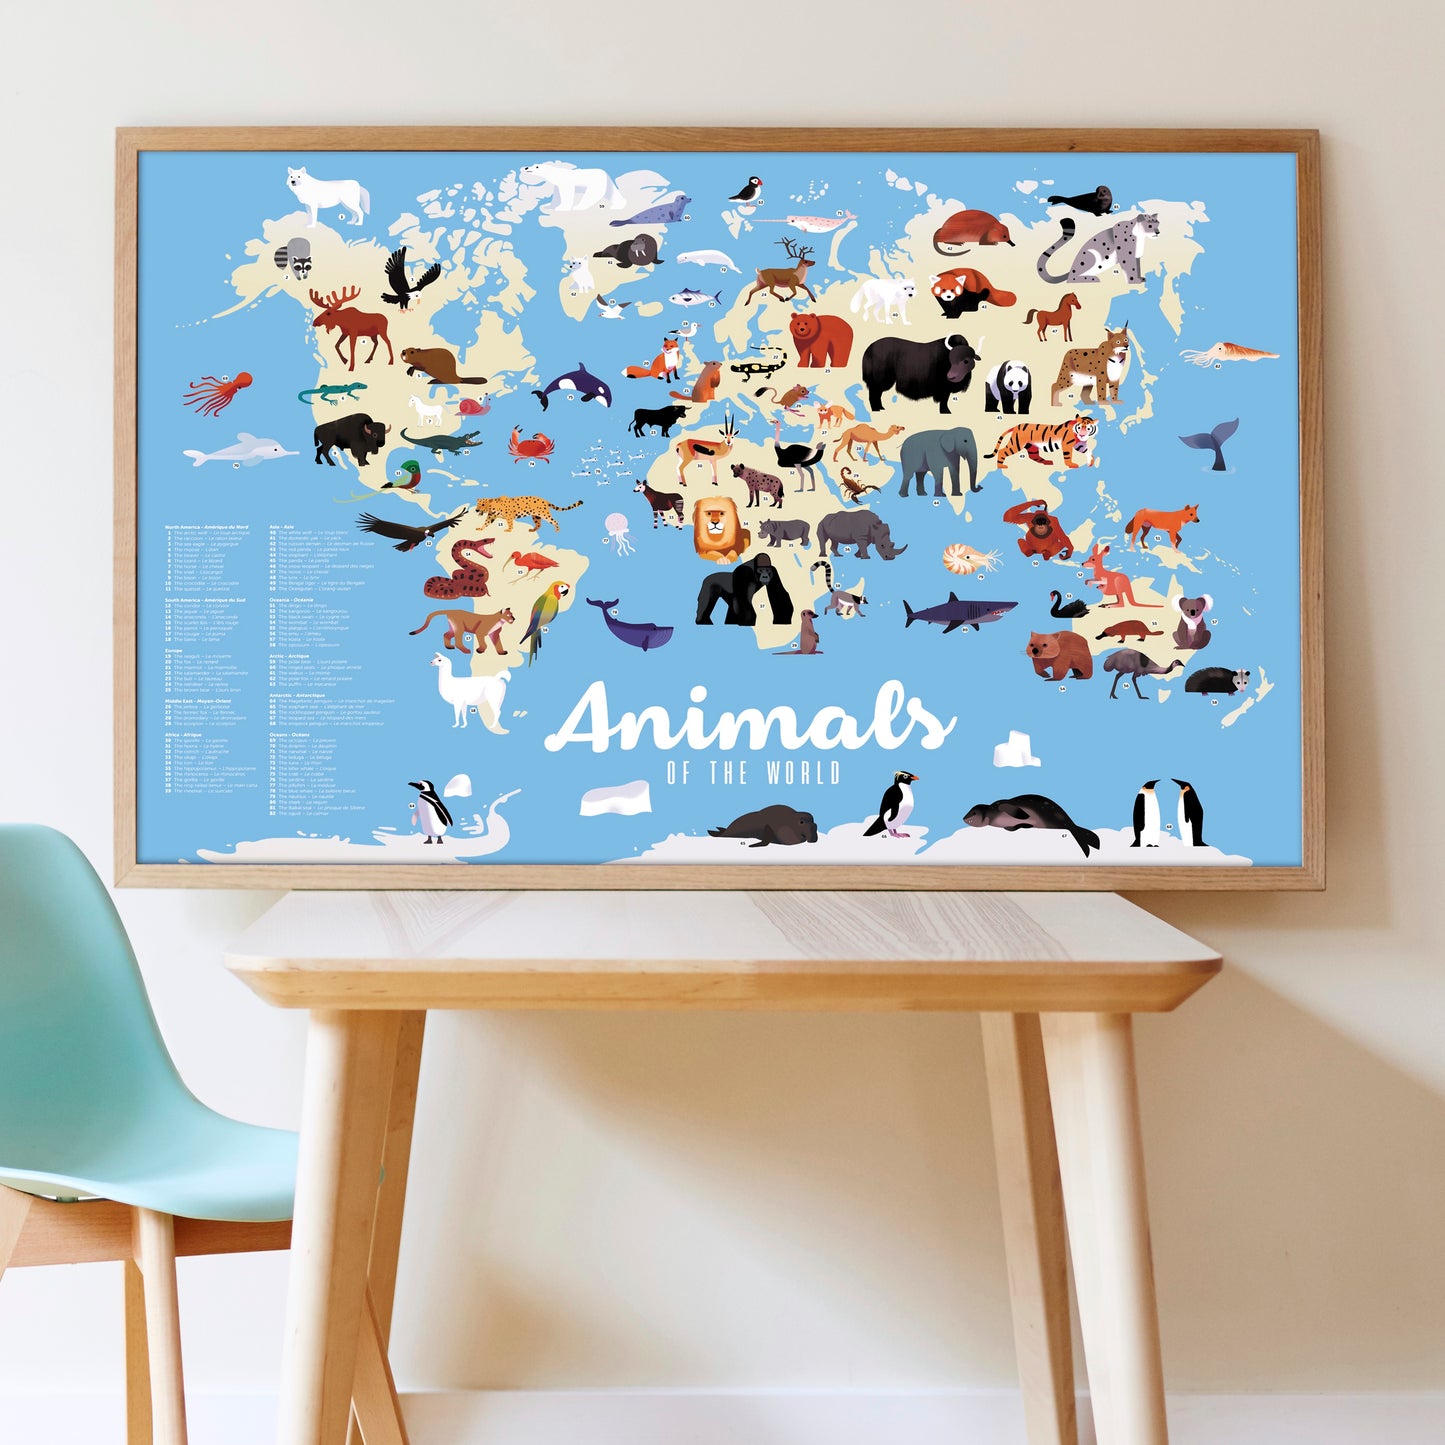 Poppik - Animals sticker Poster